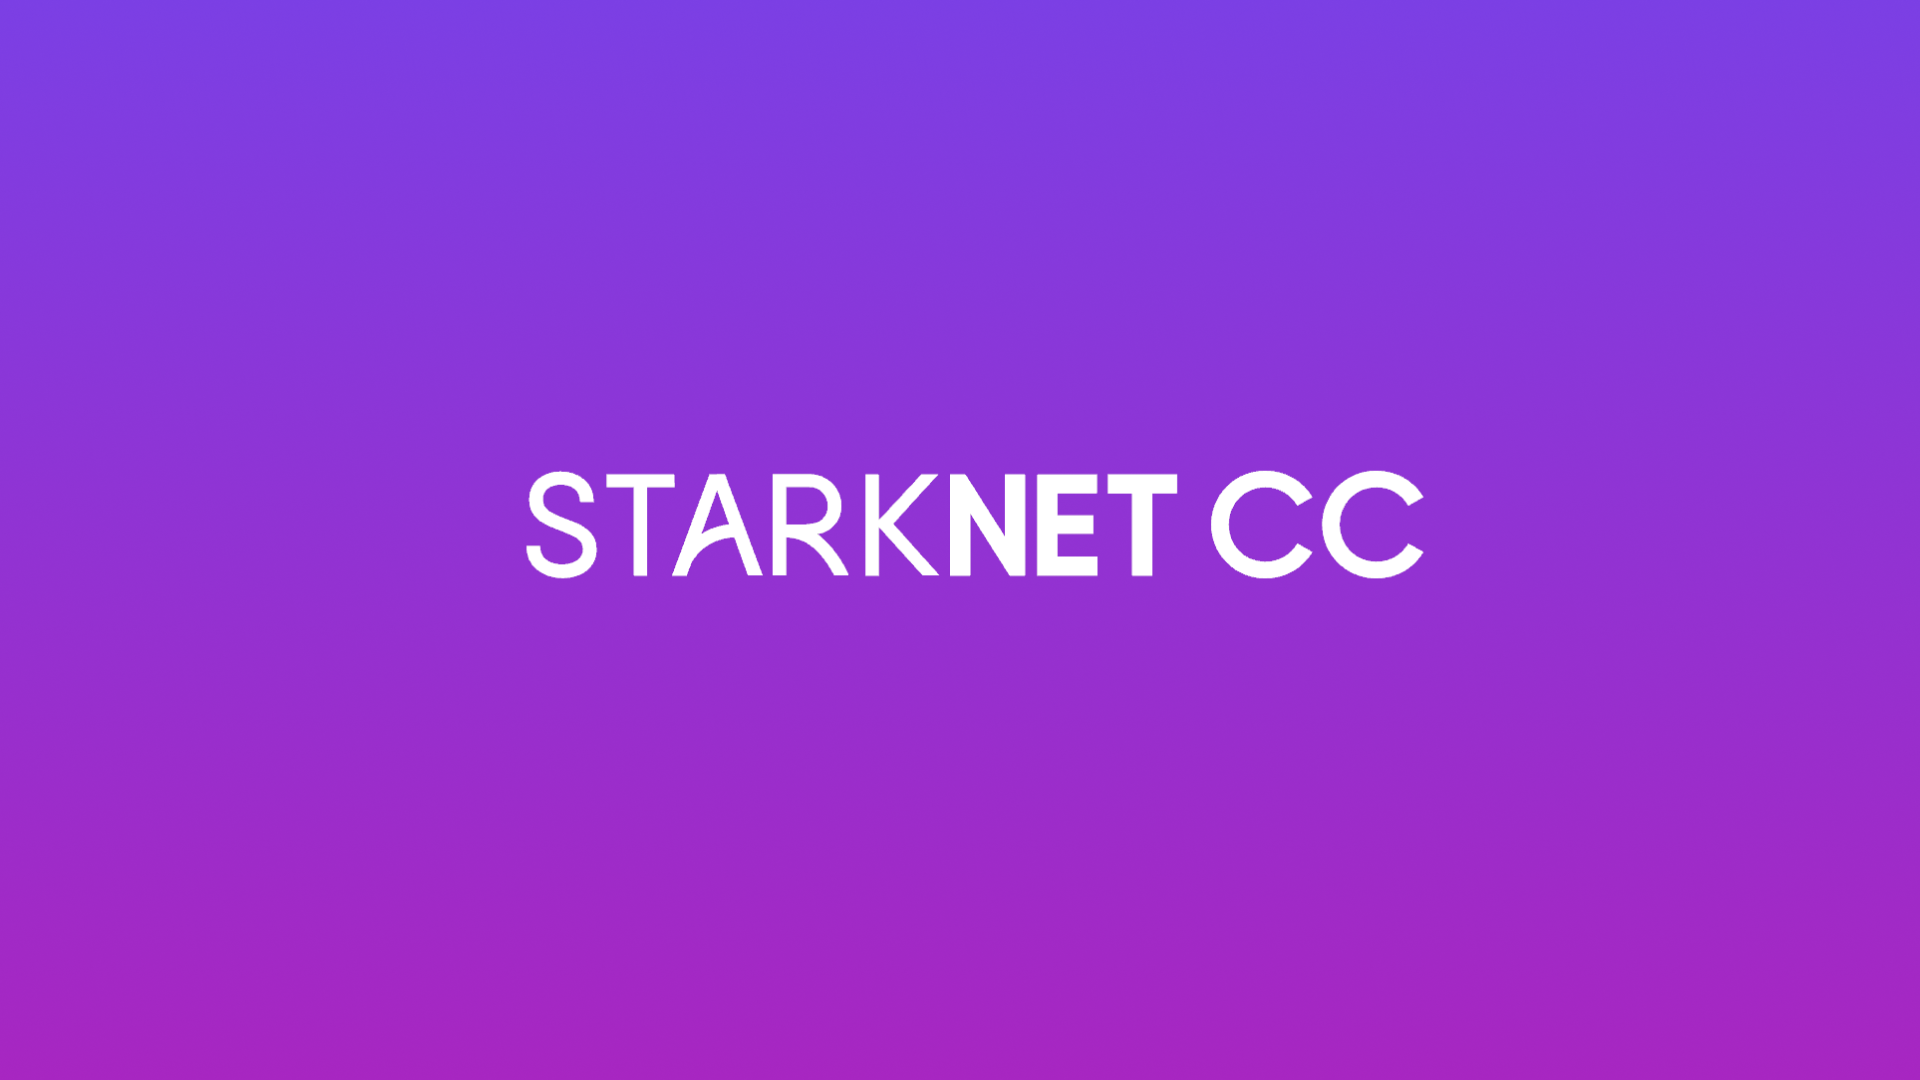 Starknet CC